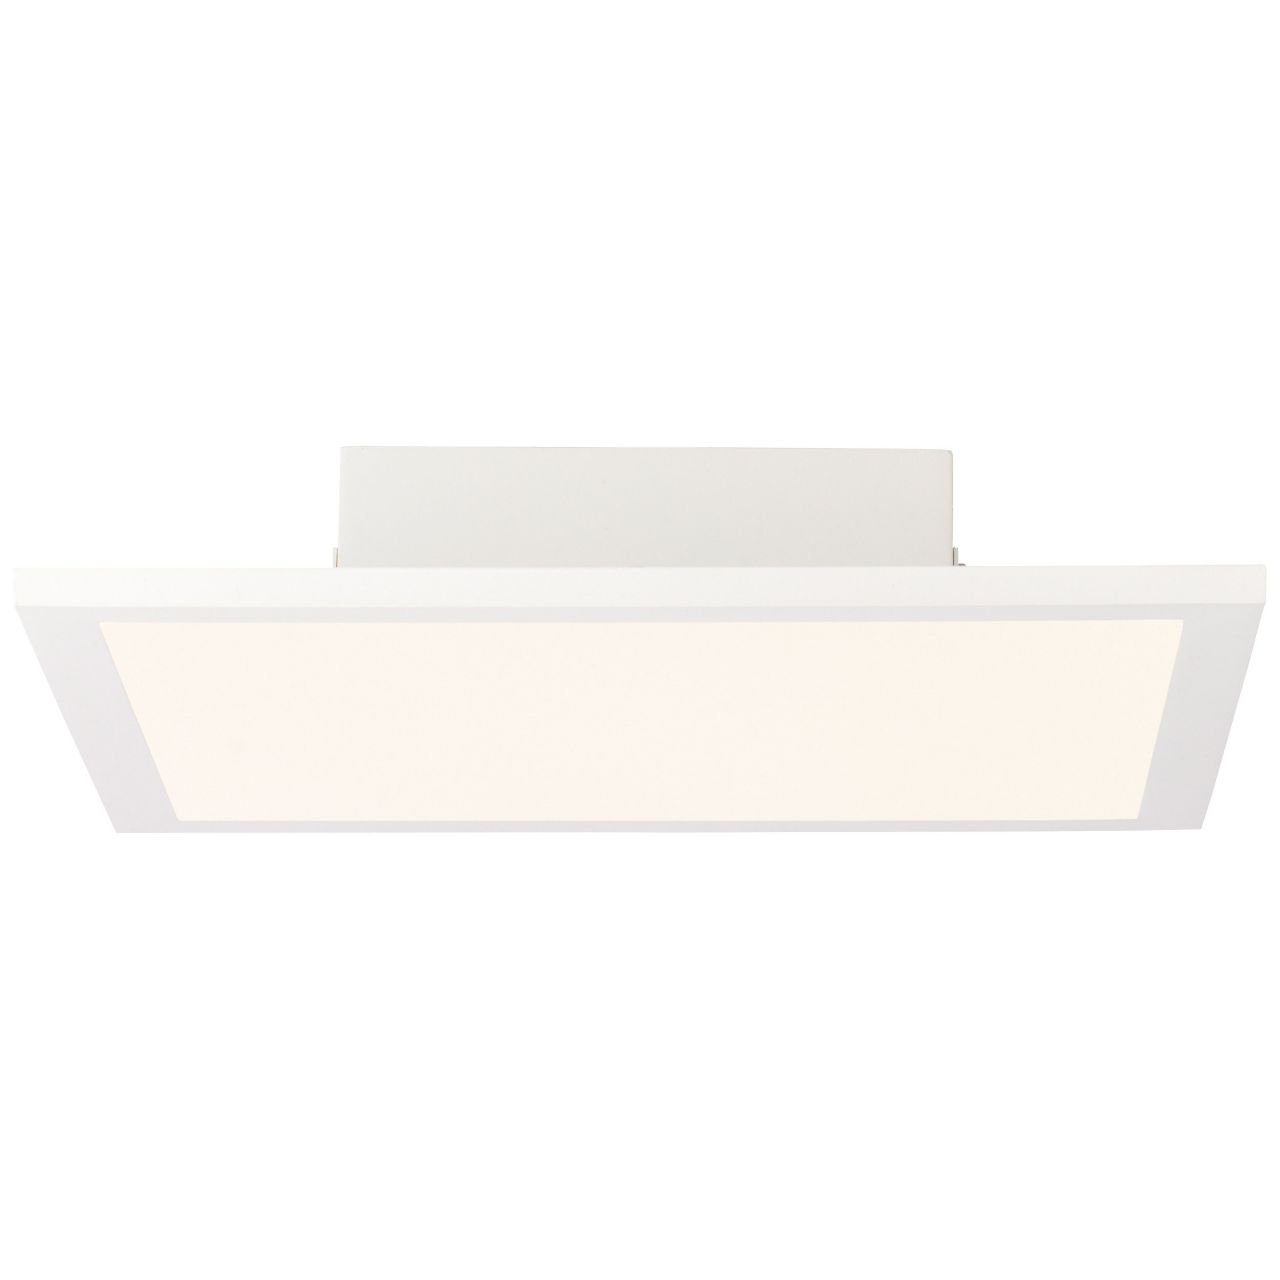 LED weiß Buffi Aufbauleuchte Deckenaufbau-Paneel Brilliant 1x Lampe 18W Buffi, 2700K, 30x30cm LED integrie